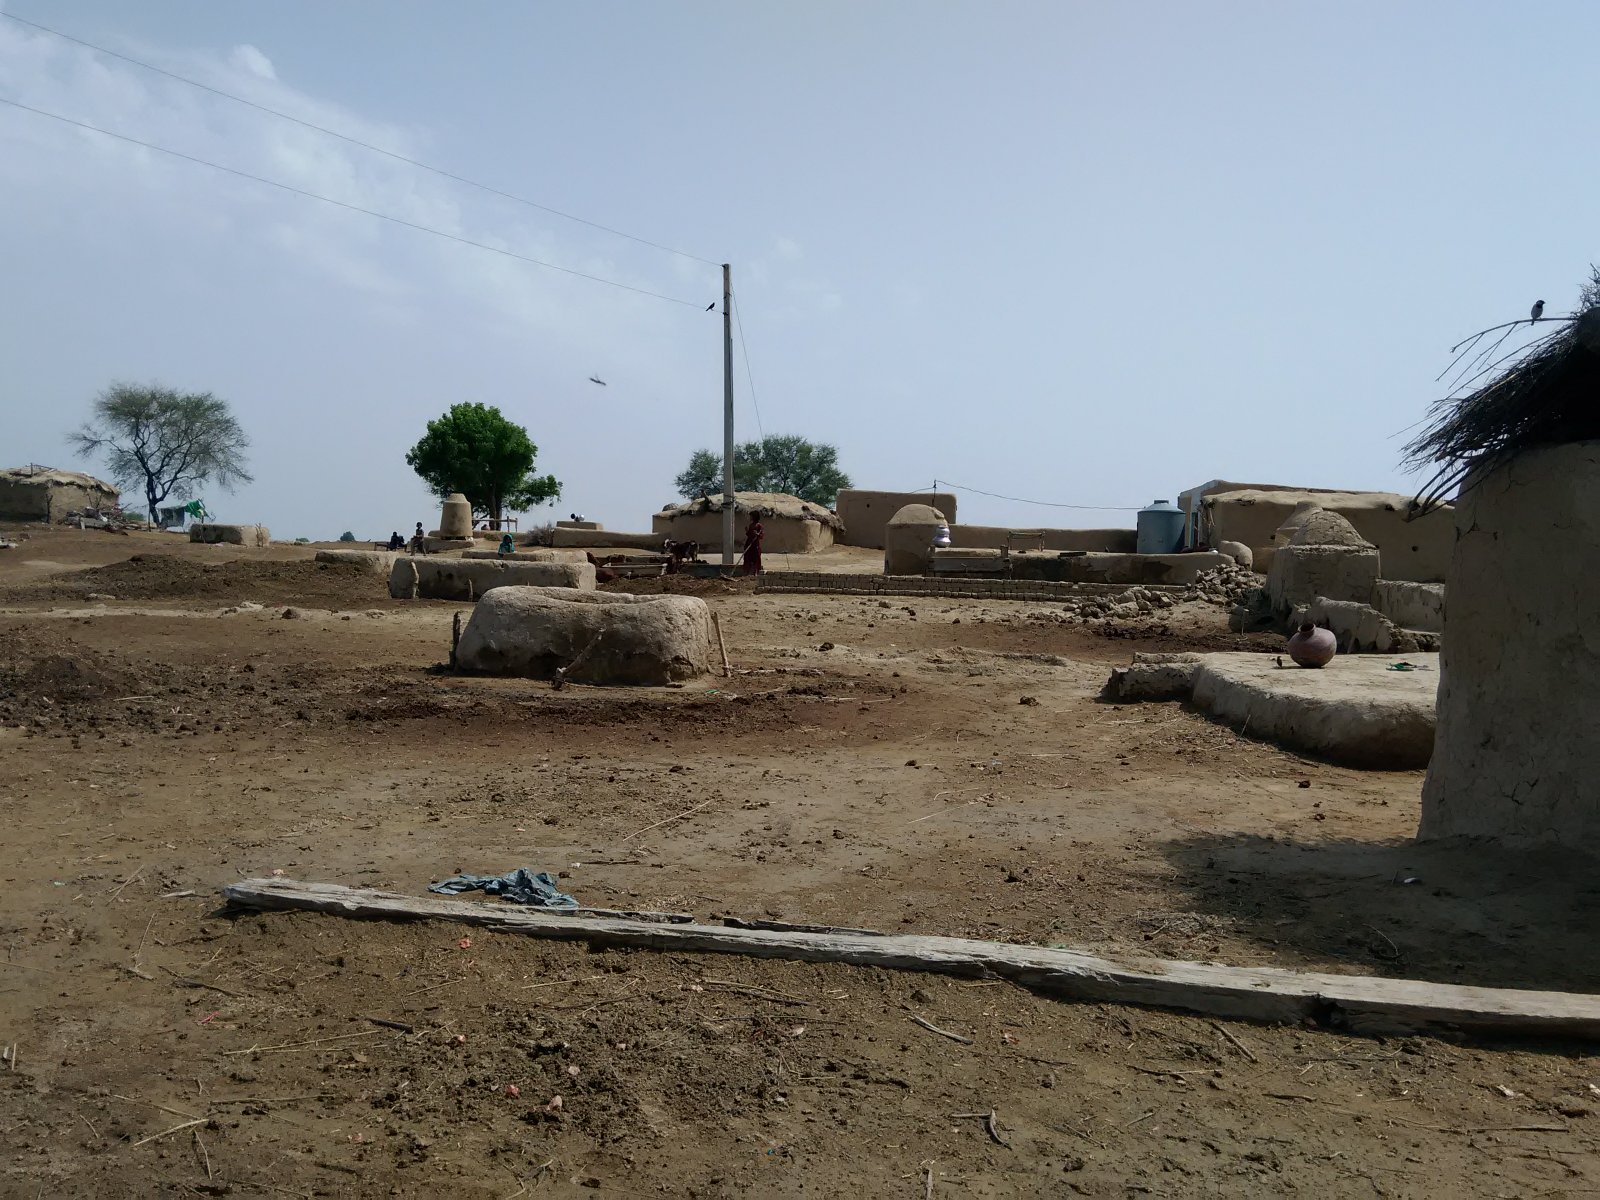 Lehmhäuser in der Wüste Cholistans. Foto: Usman Mahar